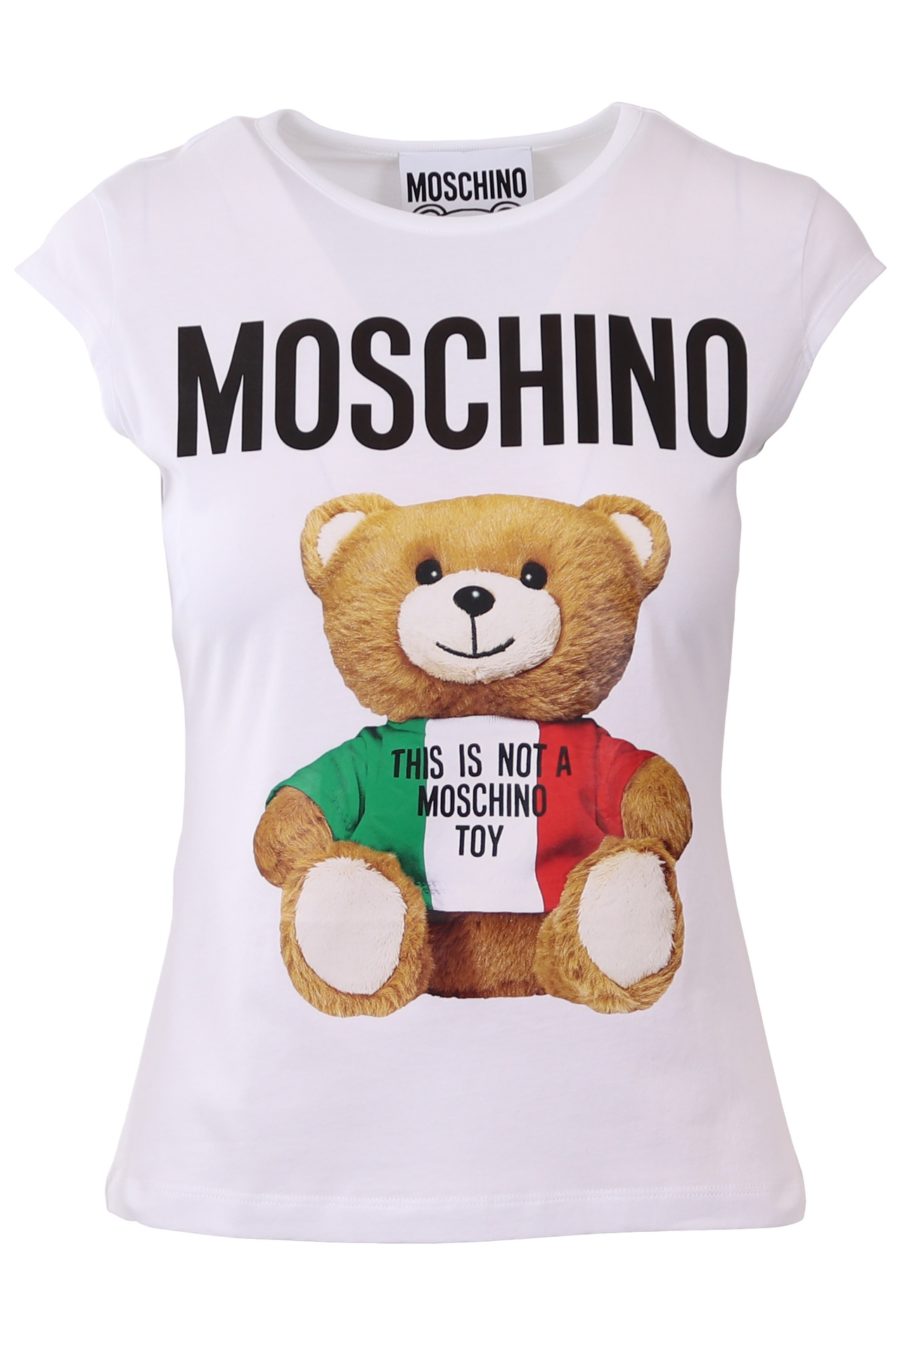 Moschino Couture T-shirt blanc avec ours italien - d2de5bca3304b89fbb4a4dd225721b54f6873677